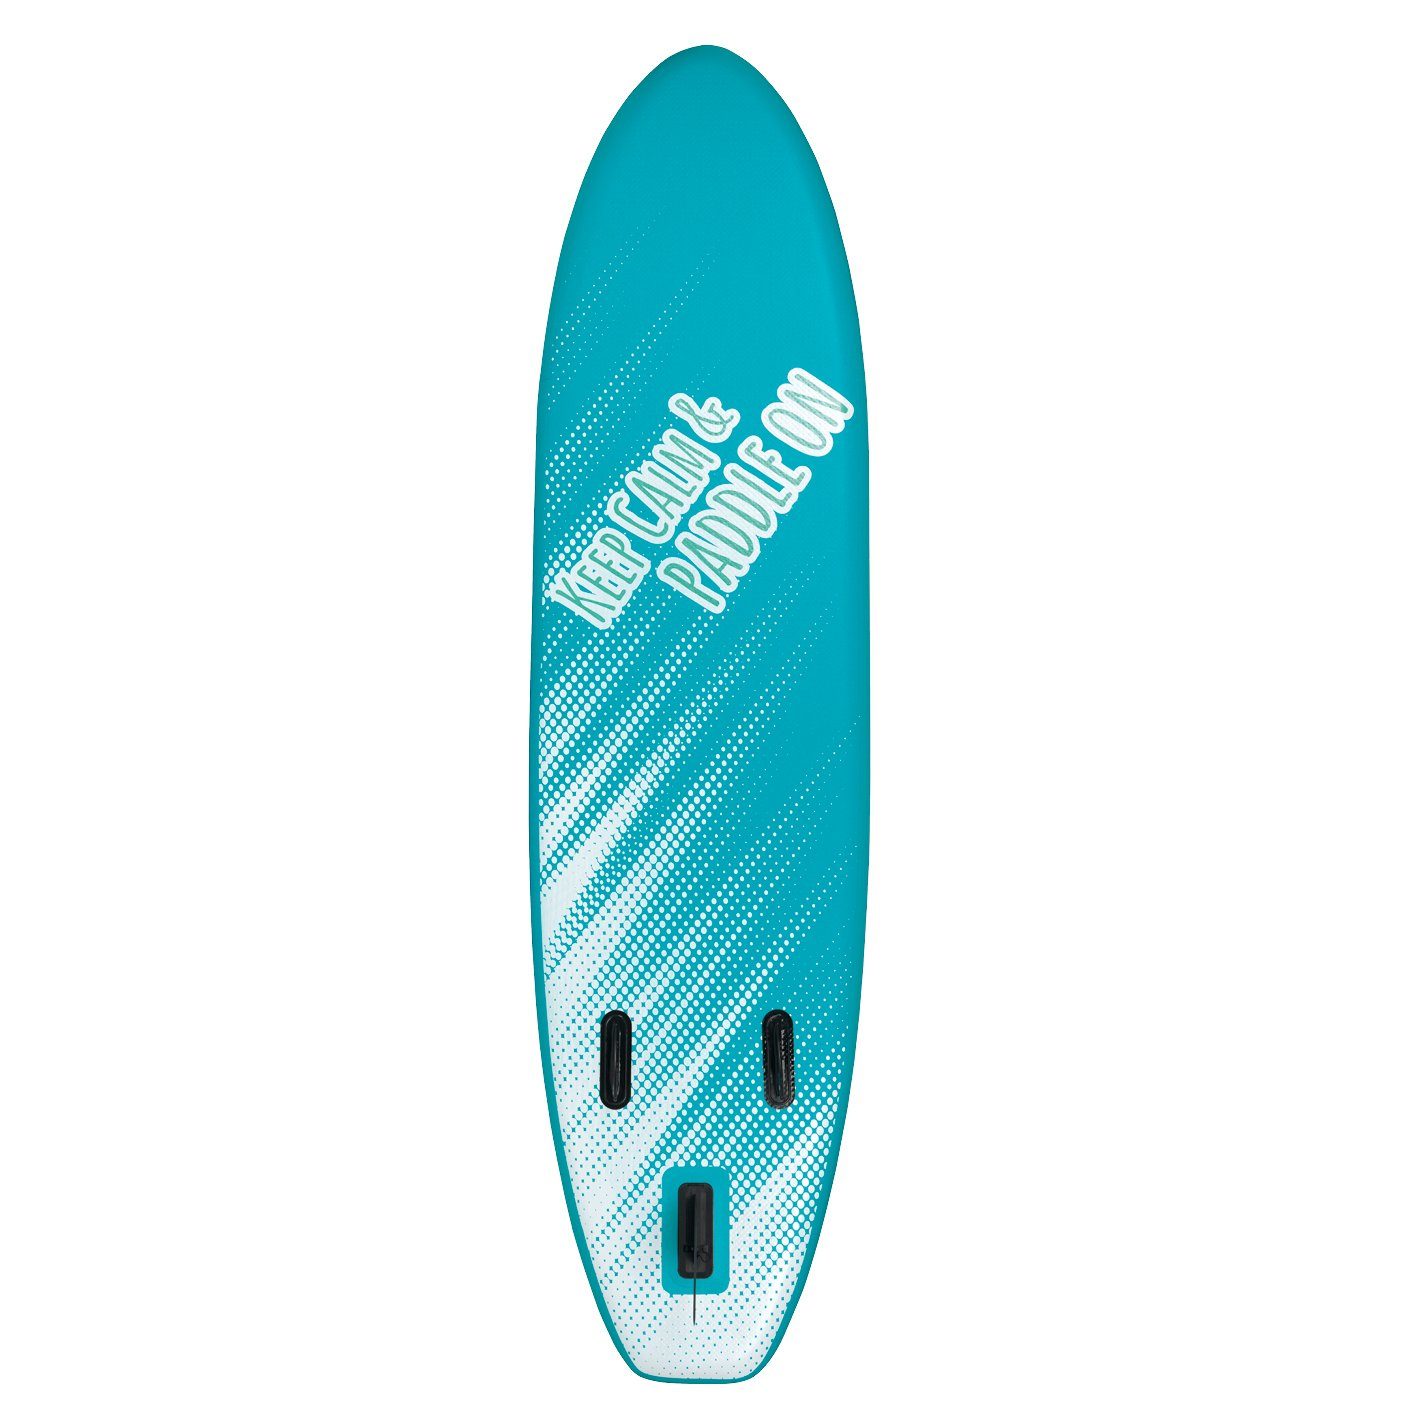 MAXXMEE Inflatable türkis/weiß Board Stand Paddel kg, Stand-Up Komplett inkl. Zubehör, Set Paddling SUP SUP-Board Paddle-Board 300 110 up cm